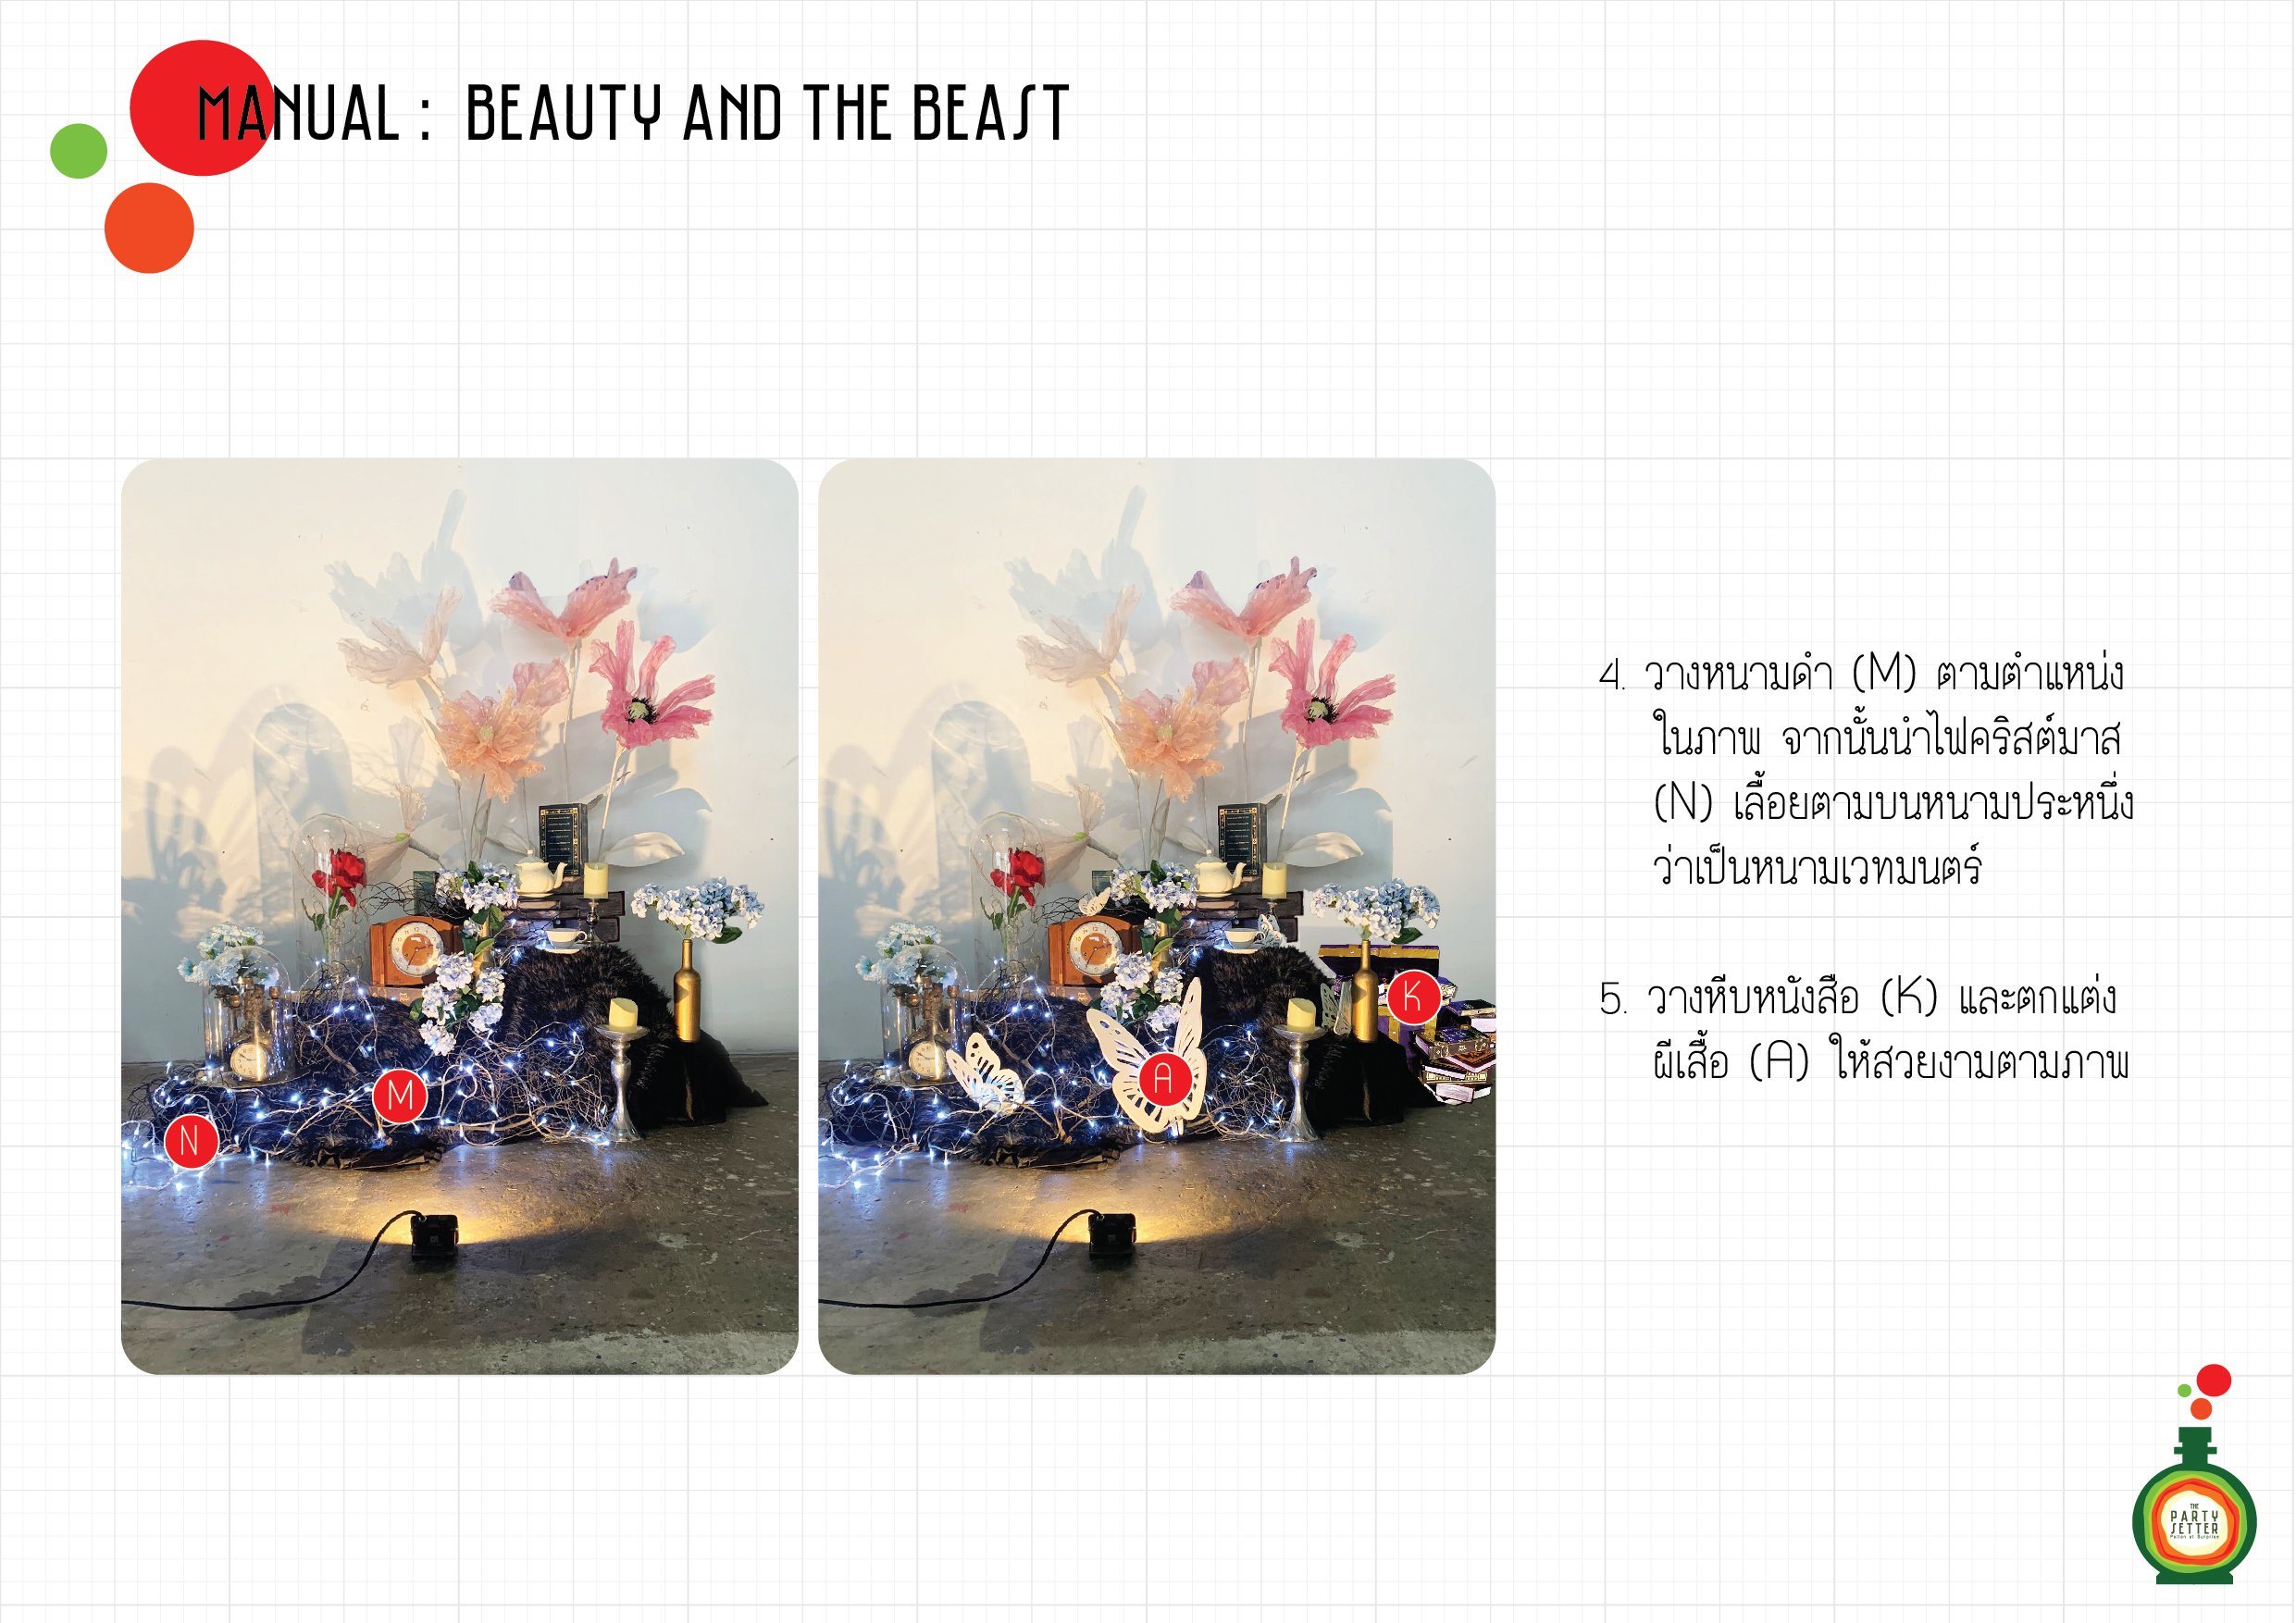 Manual_Beauty and the Beast-04-01.jpg